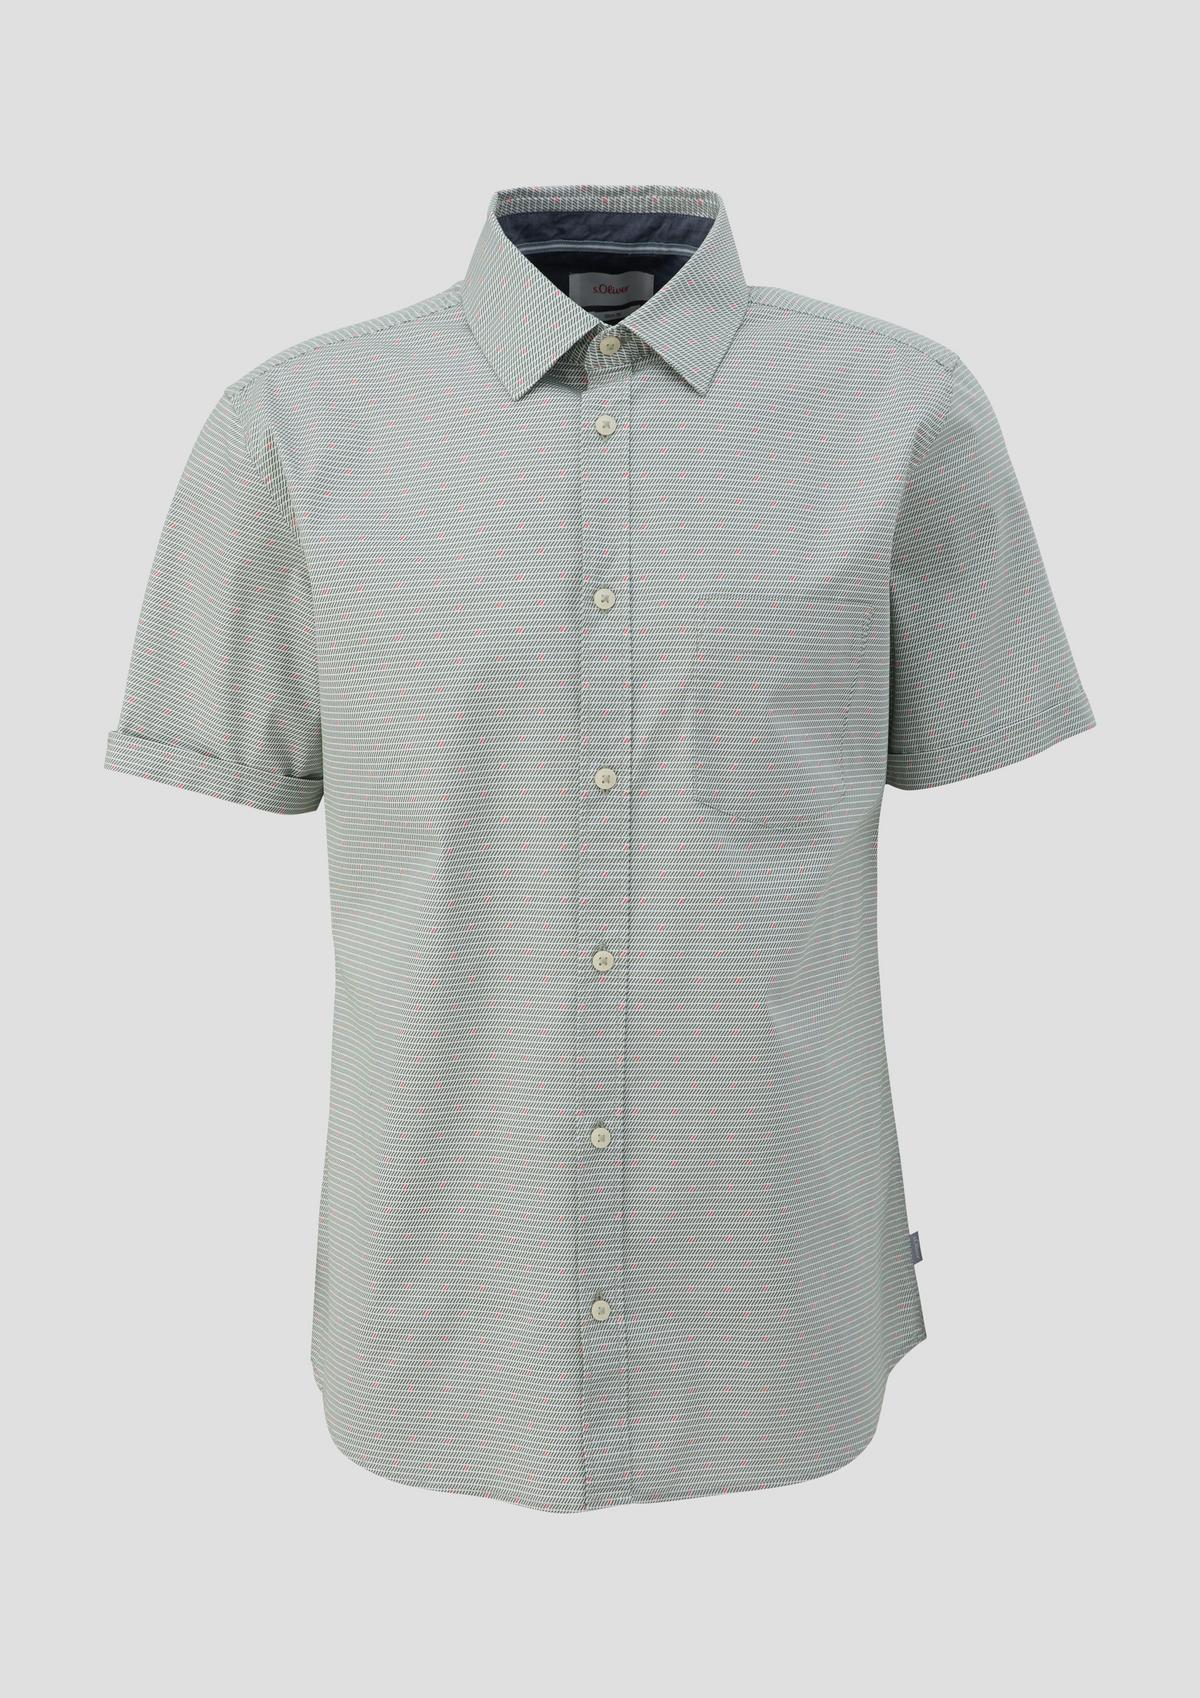 s.Oliver Slim fit: Stretch cotton short sleeve shirt